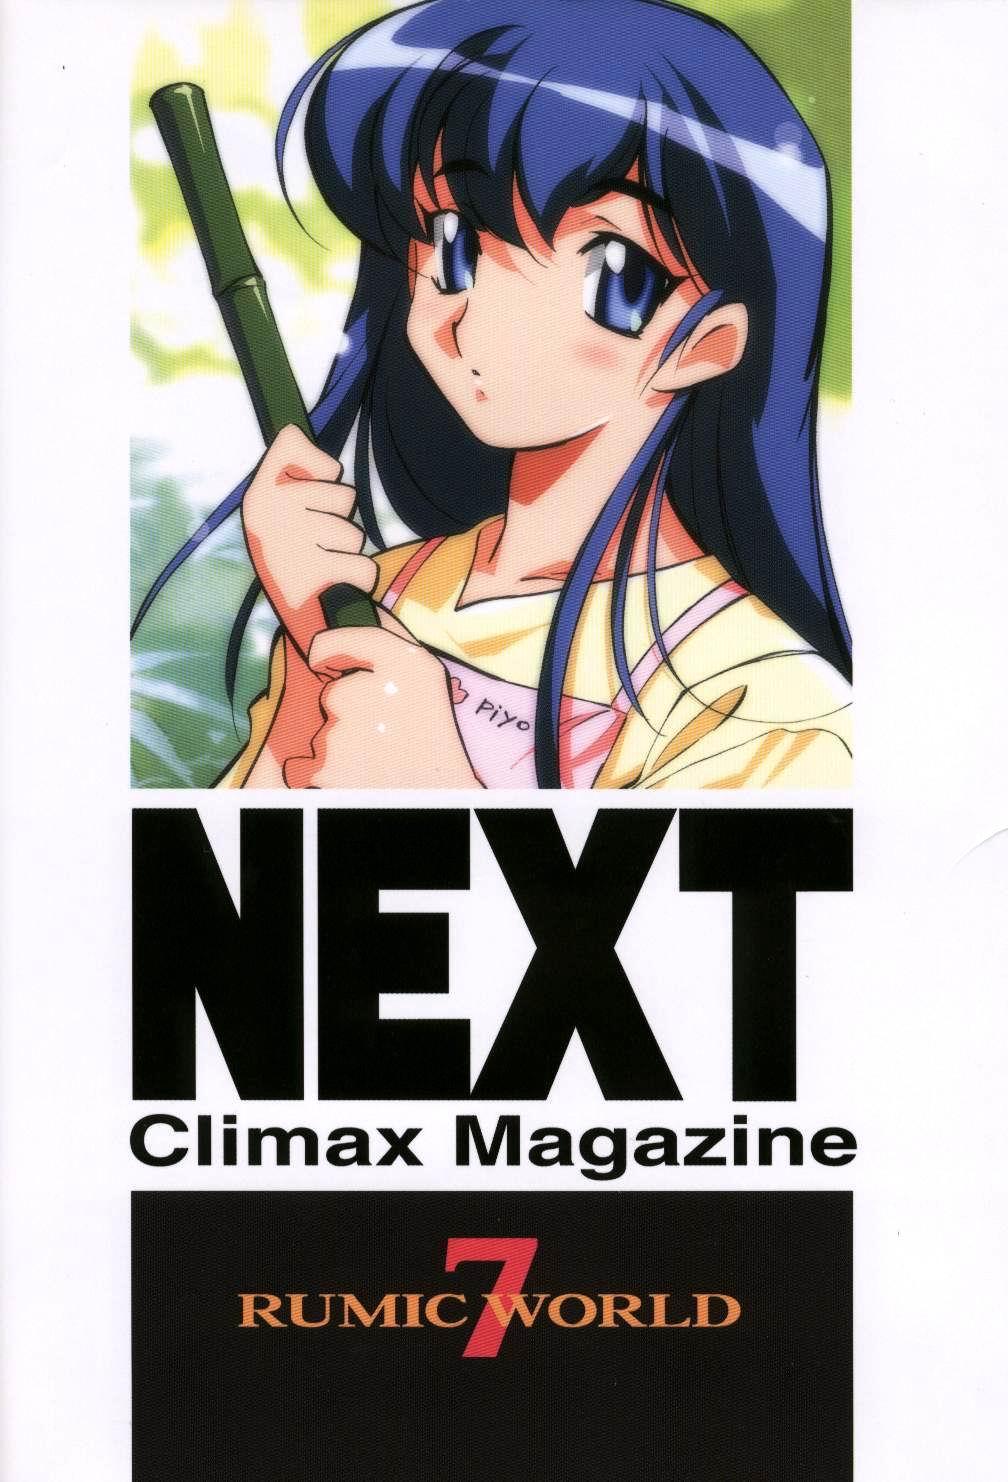 Next Climax Magazine 7 - Rumic World 97